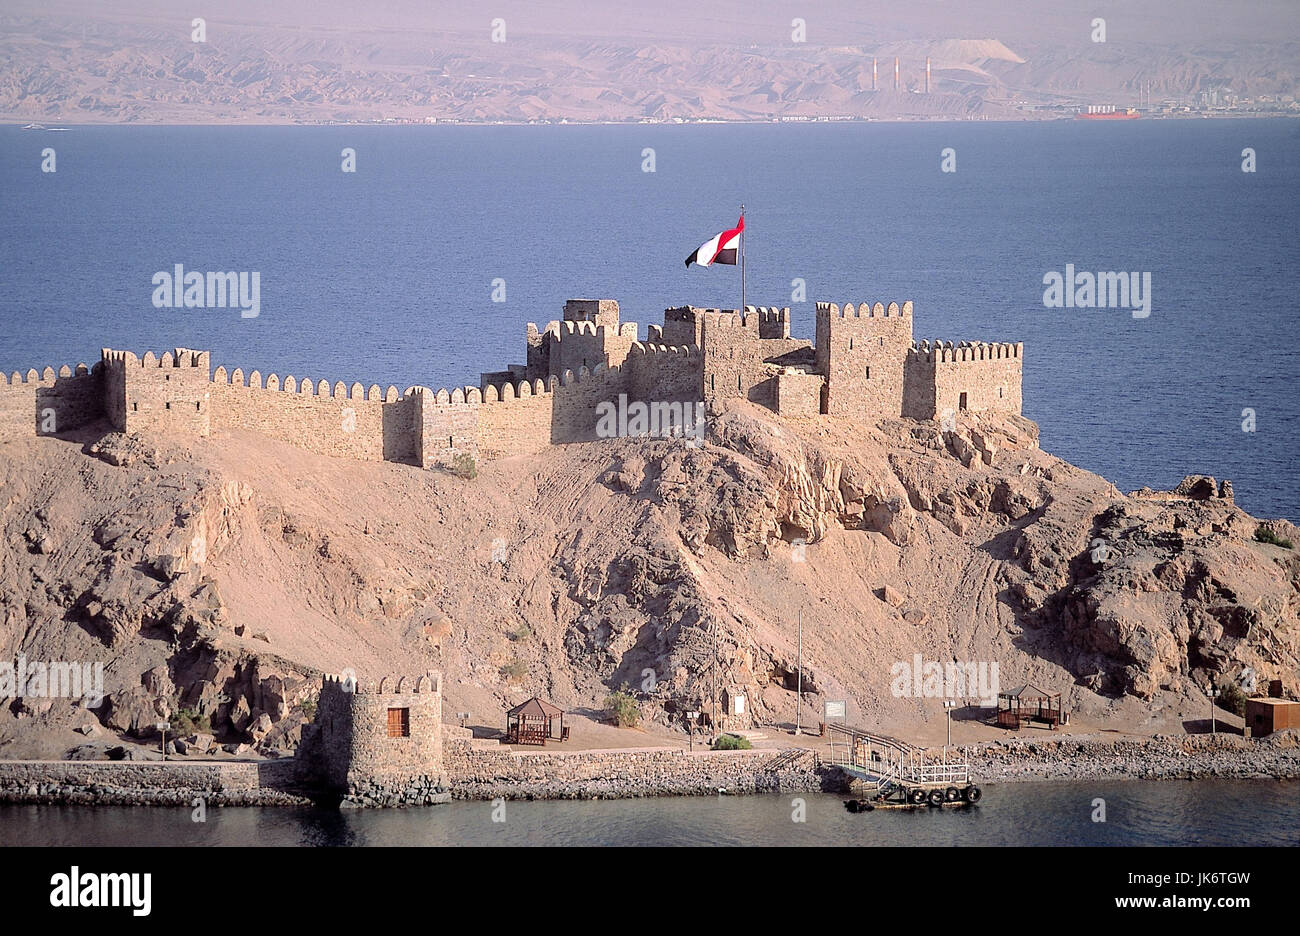 Ägypten, Sinai, Taba, Pharaoh's Island, Salah ad-Din Schloss  Burg, Burganlage, Sehenswürdigkeit, Bauwerk Stock Photo